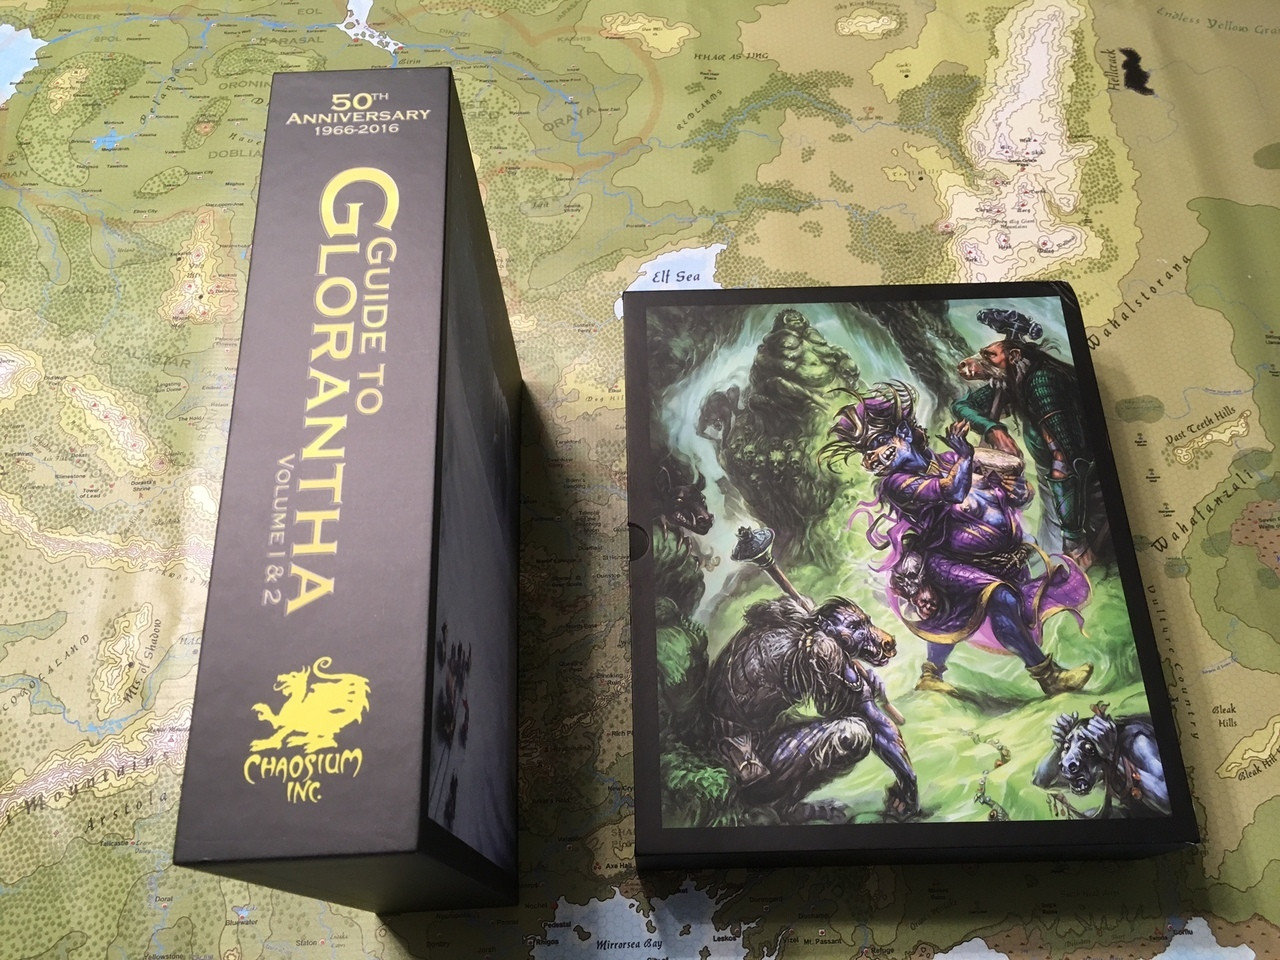 The Guide to Glorantha (slipcase set) - Chaosium Inc.